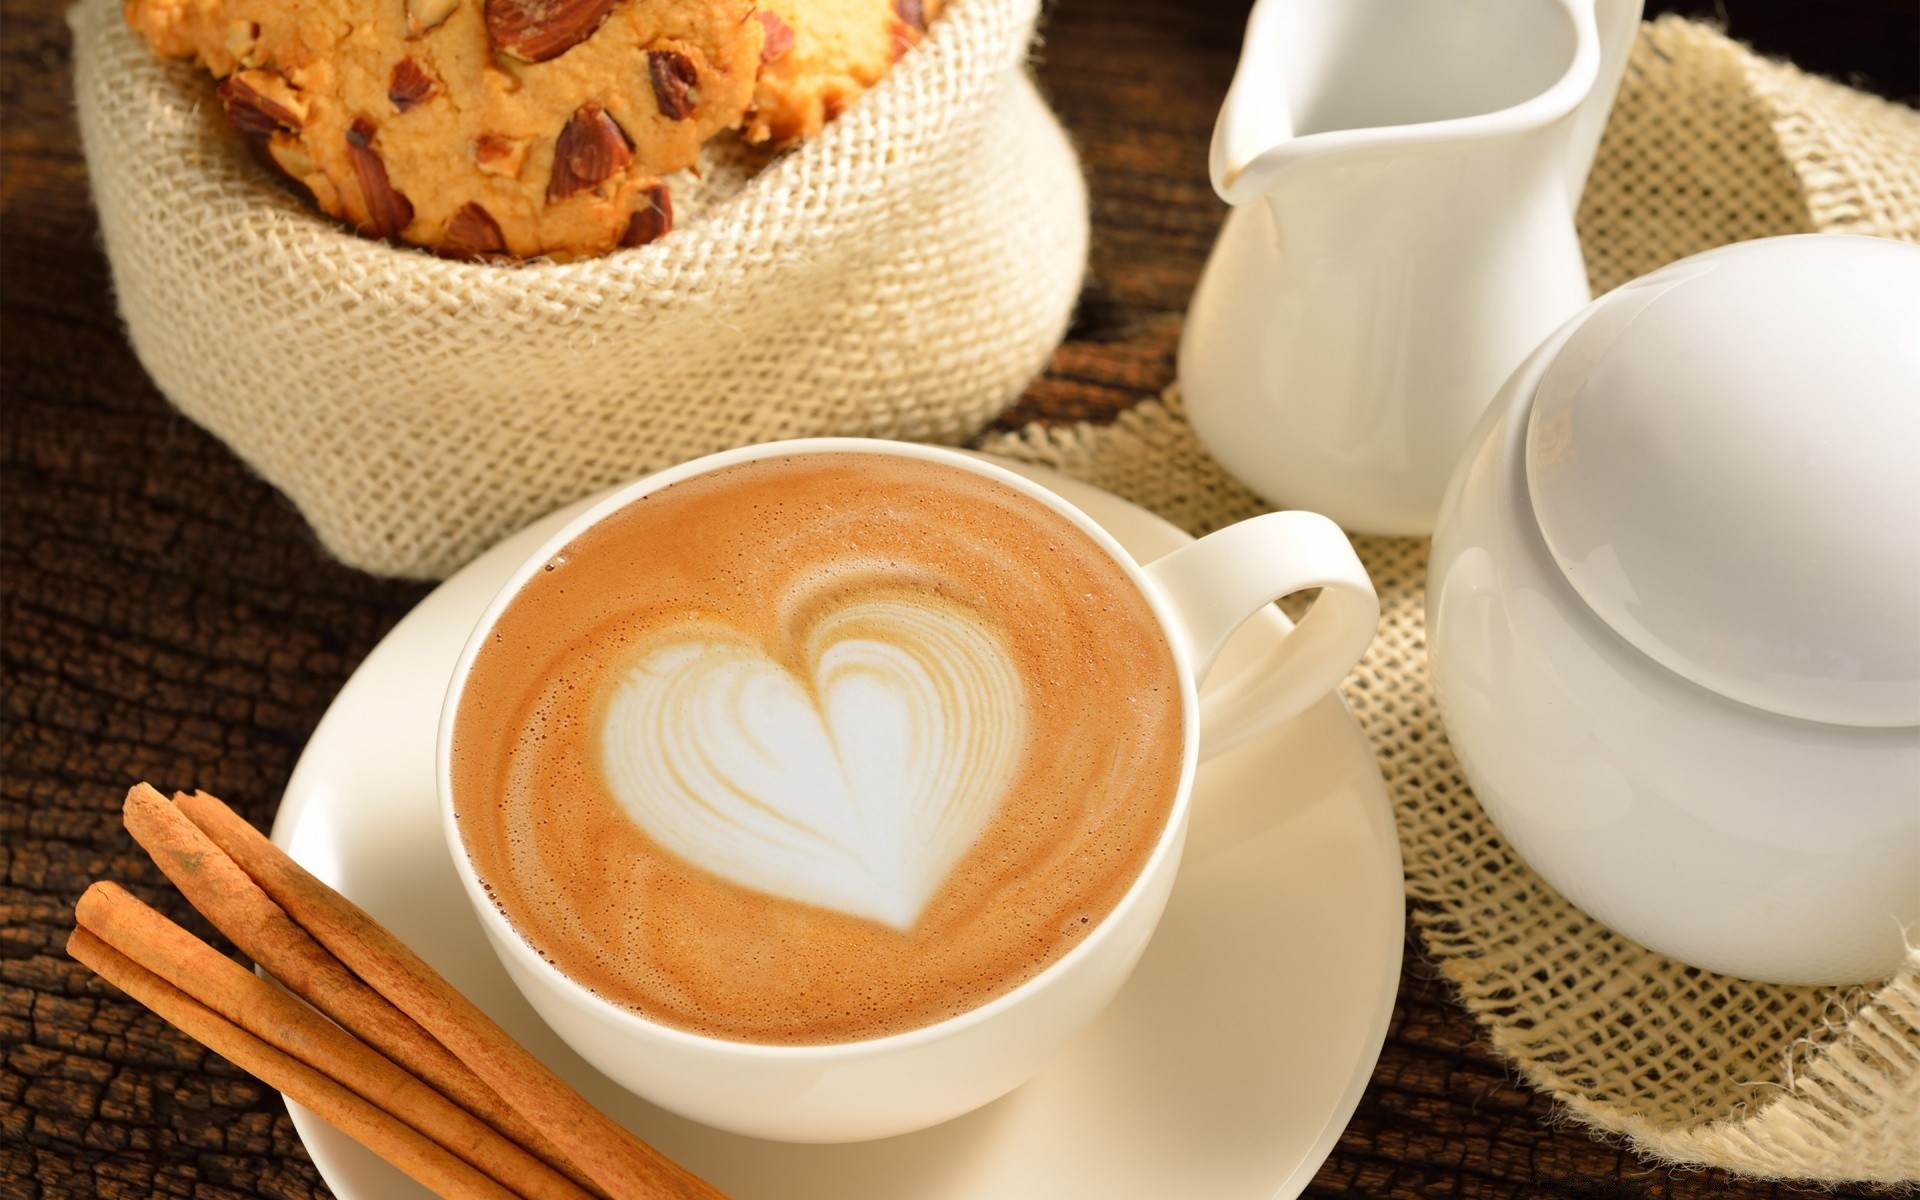 desserts coffee drink cup breakfast espresso food dawn hot cappuccino milk wood table caffeine mug